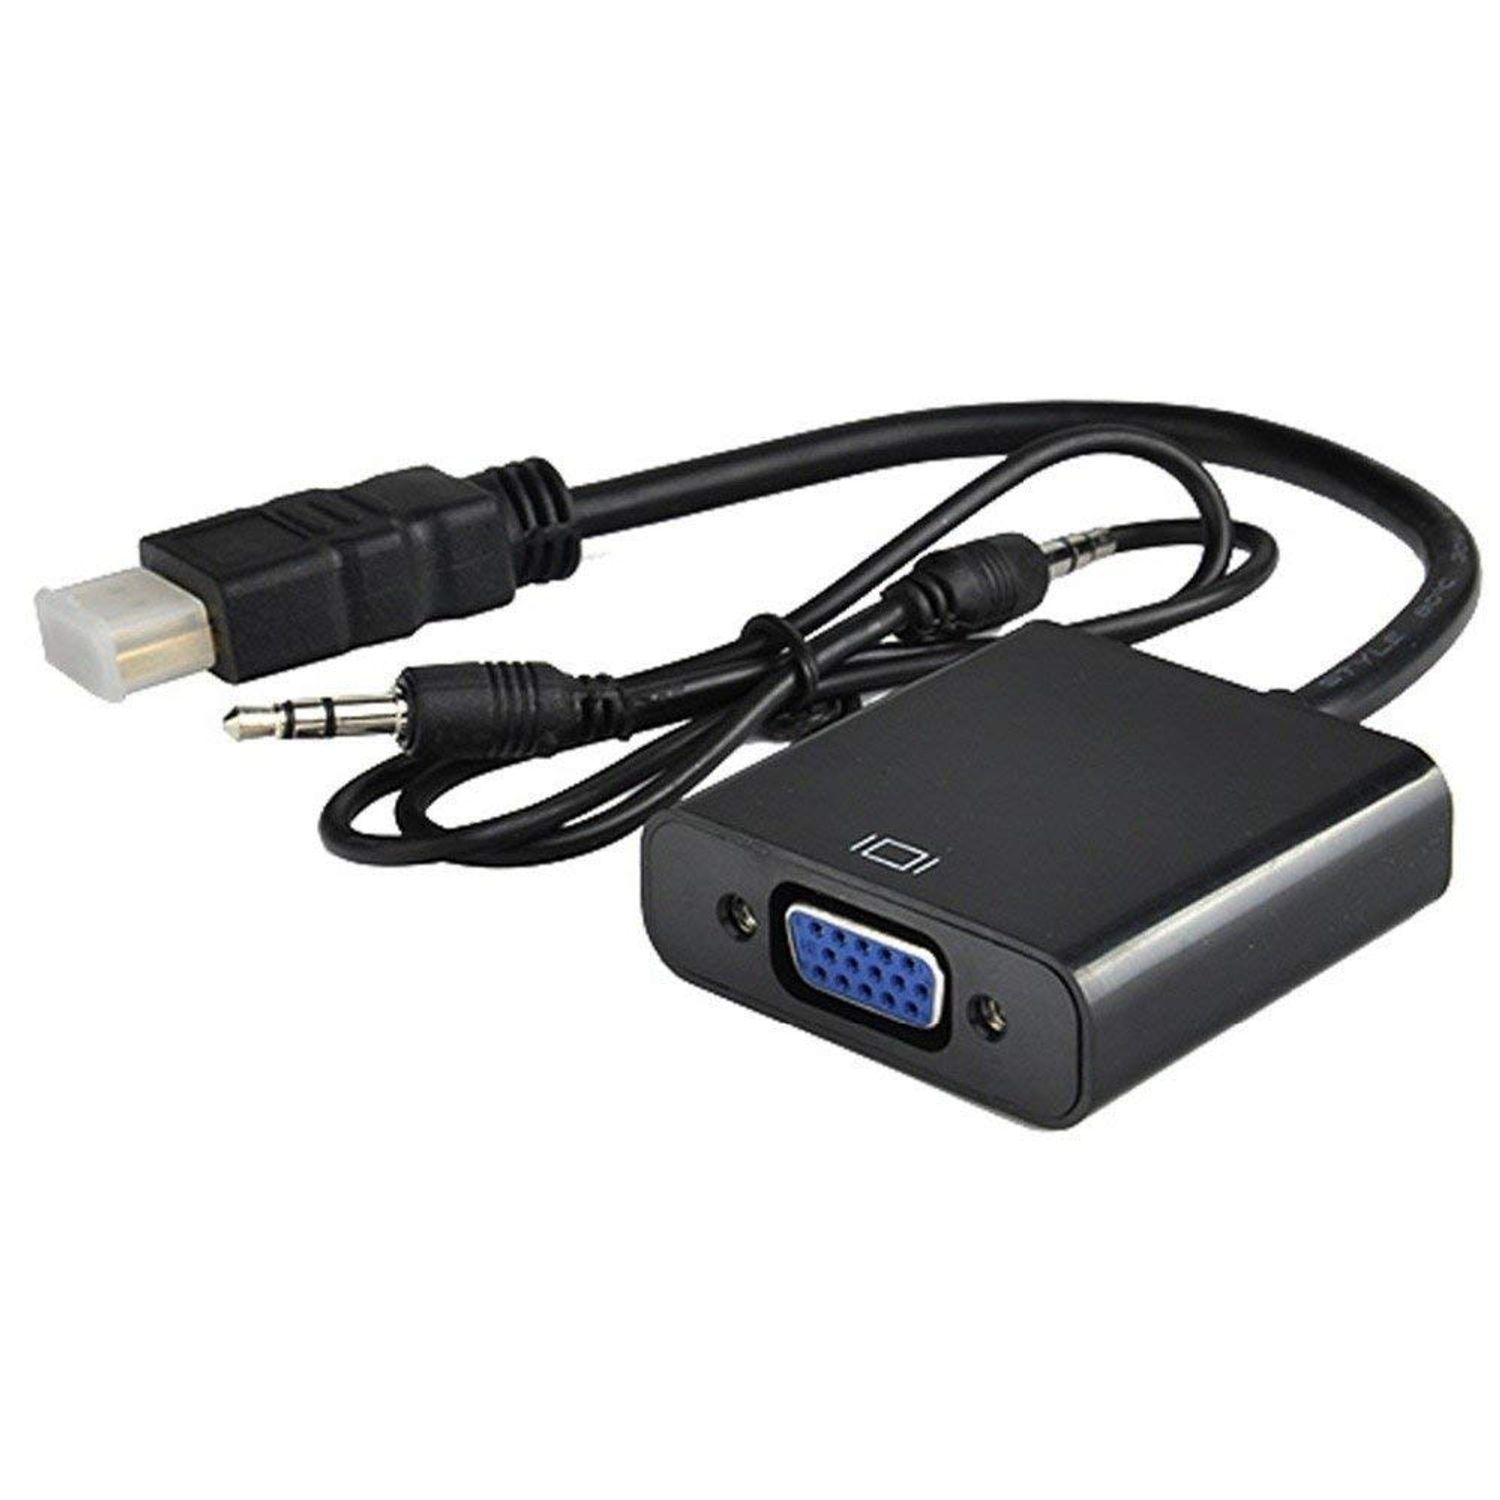 HDMI a VGA adaptador  Compra online en